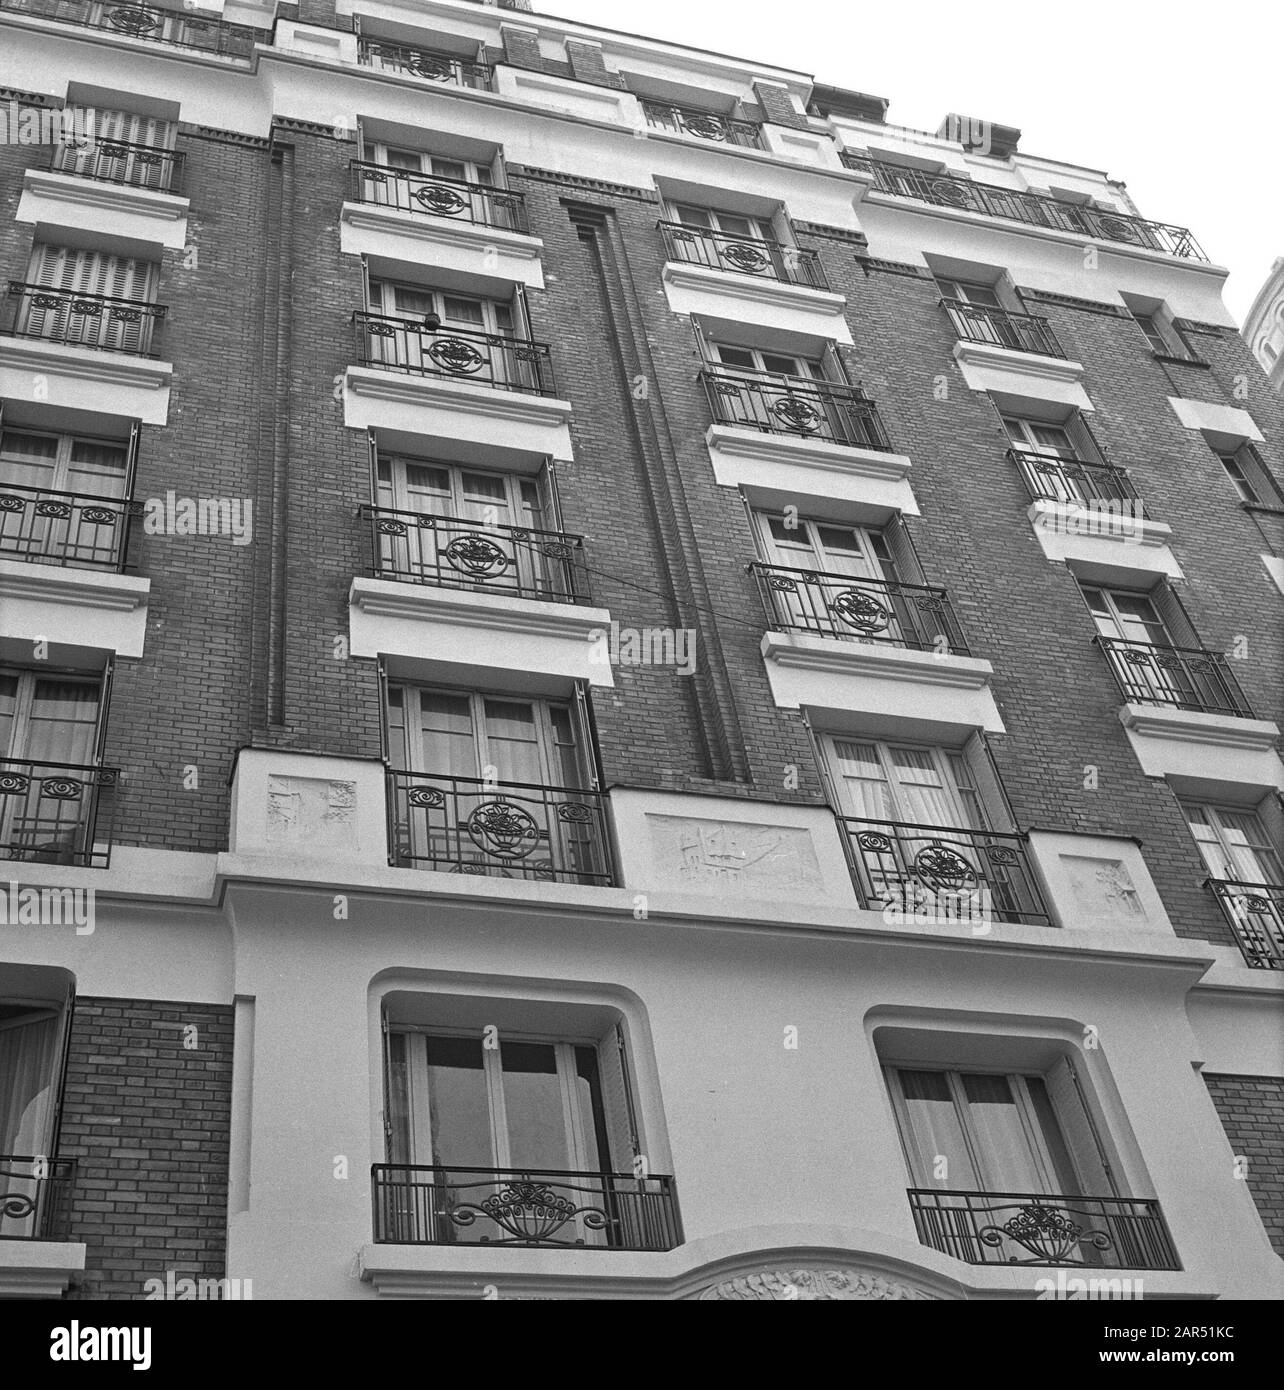 Pariser Bilder [The street life of Paris]  Facade with French balconies Date: 1965 Location: France, Paris Keywords: balconies, buildings, facades Stock Photo